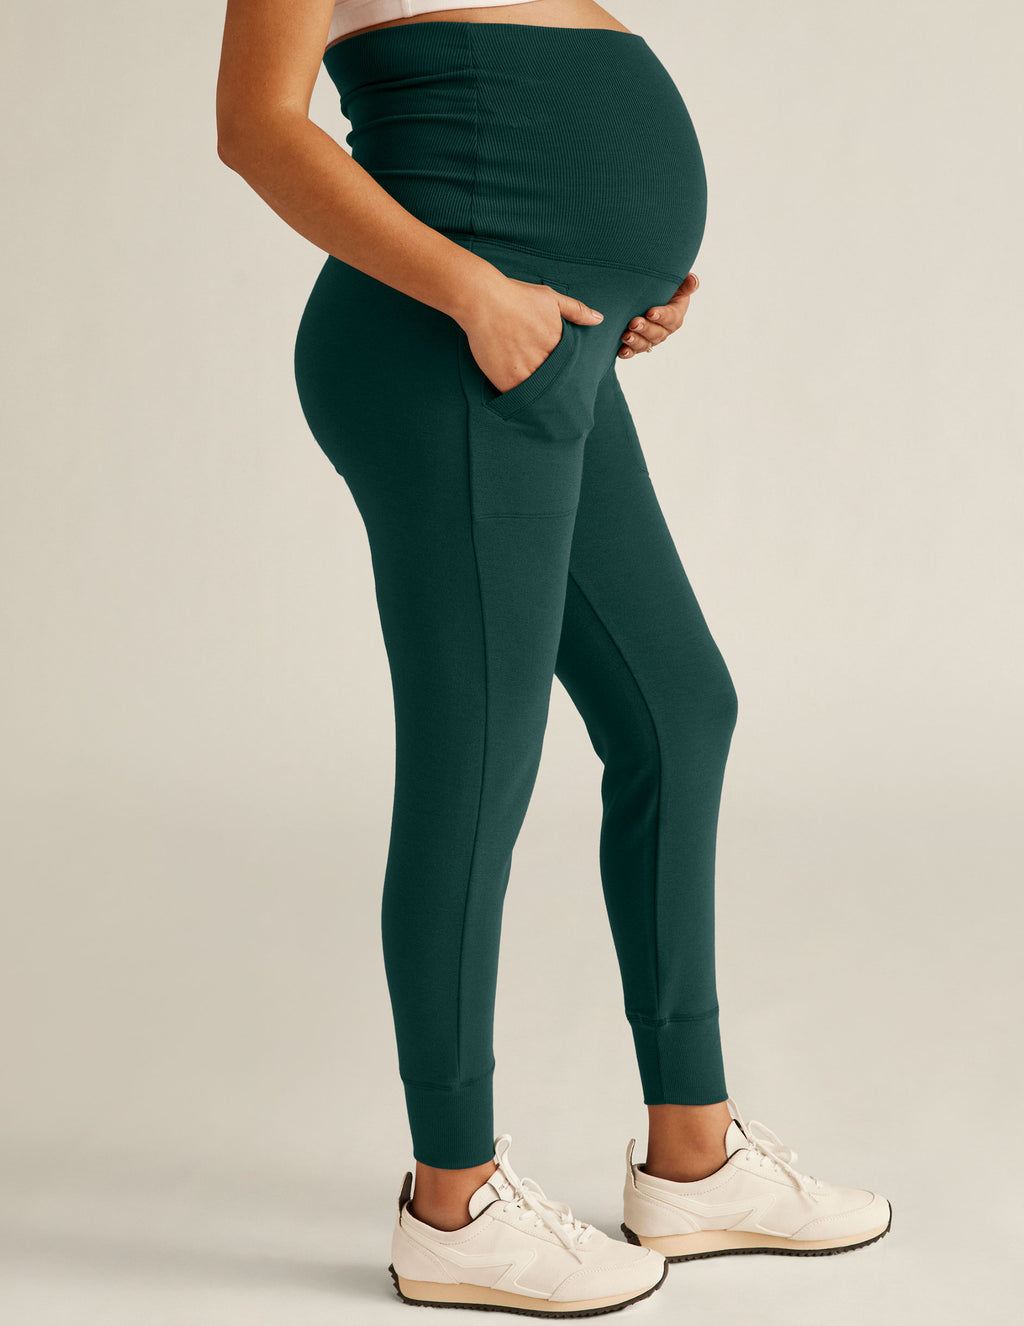 JDEFEG Maternity Yoga Pants for Women Petite Yoga Running Leggings